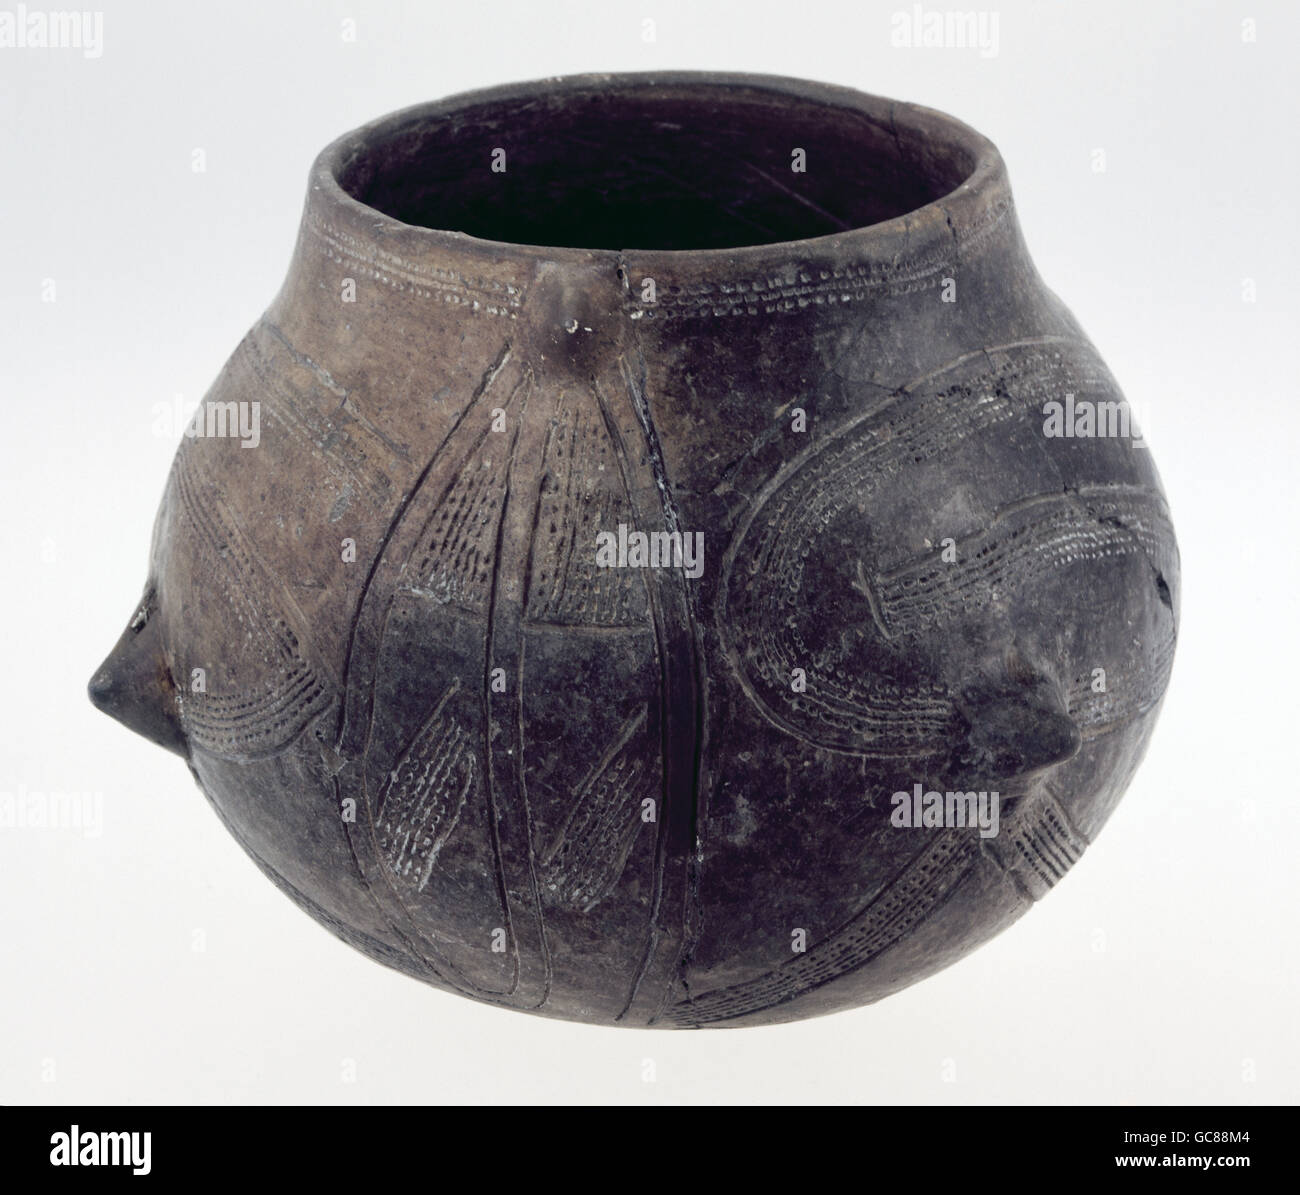 fine arts, stone age, linear pottery culture, craft / handcraft, vessel, circa 5300 - 4900 BC, ceramics, Rhenish national museum, Bonn, Germany, Stock Photo